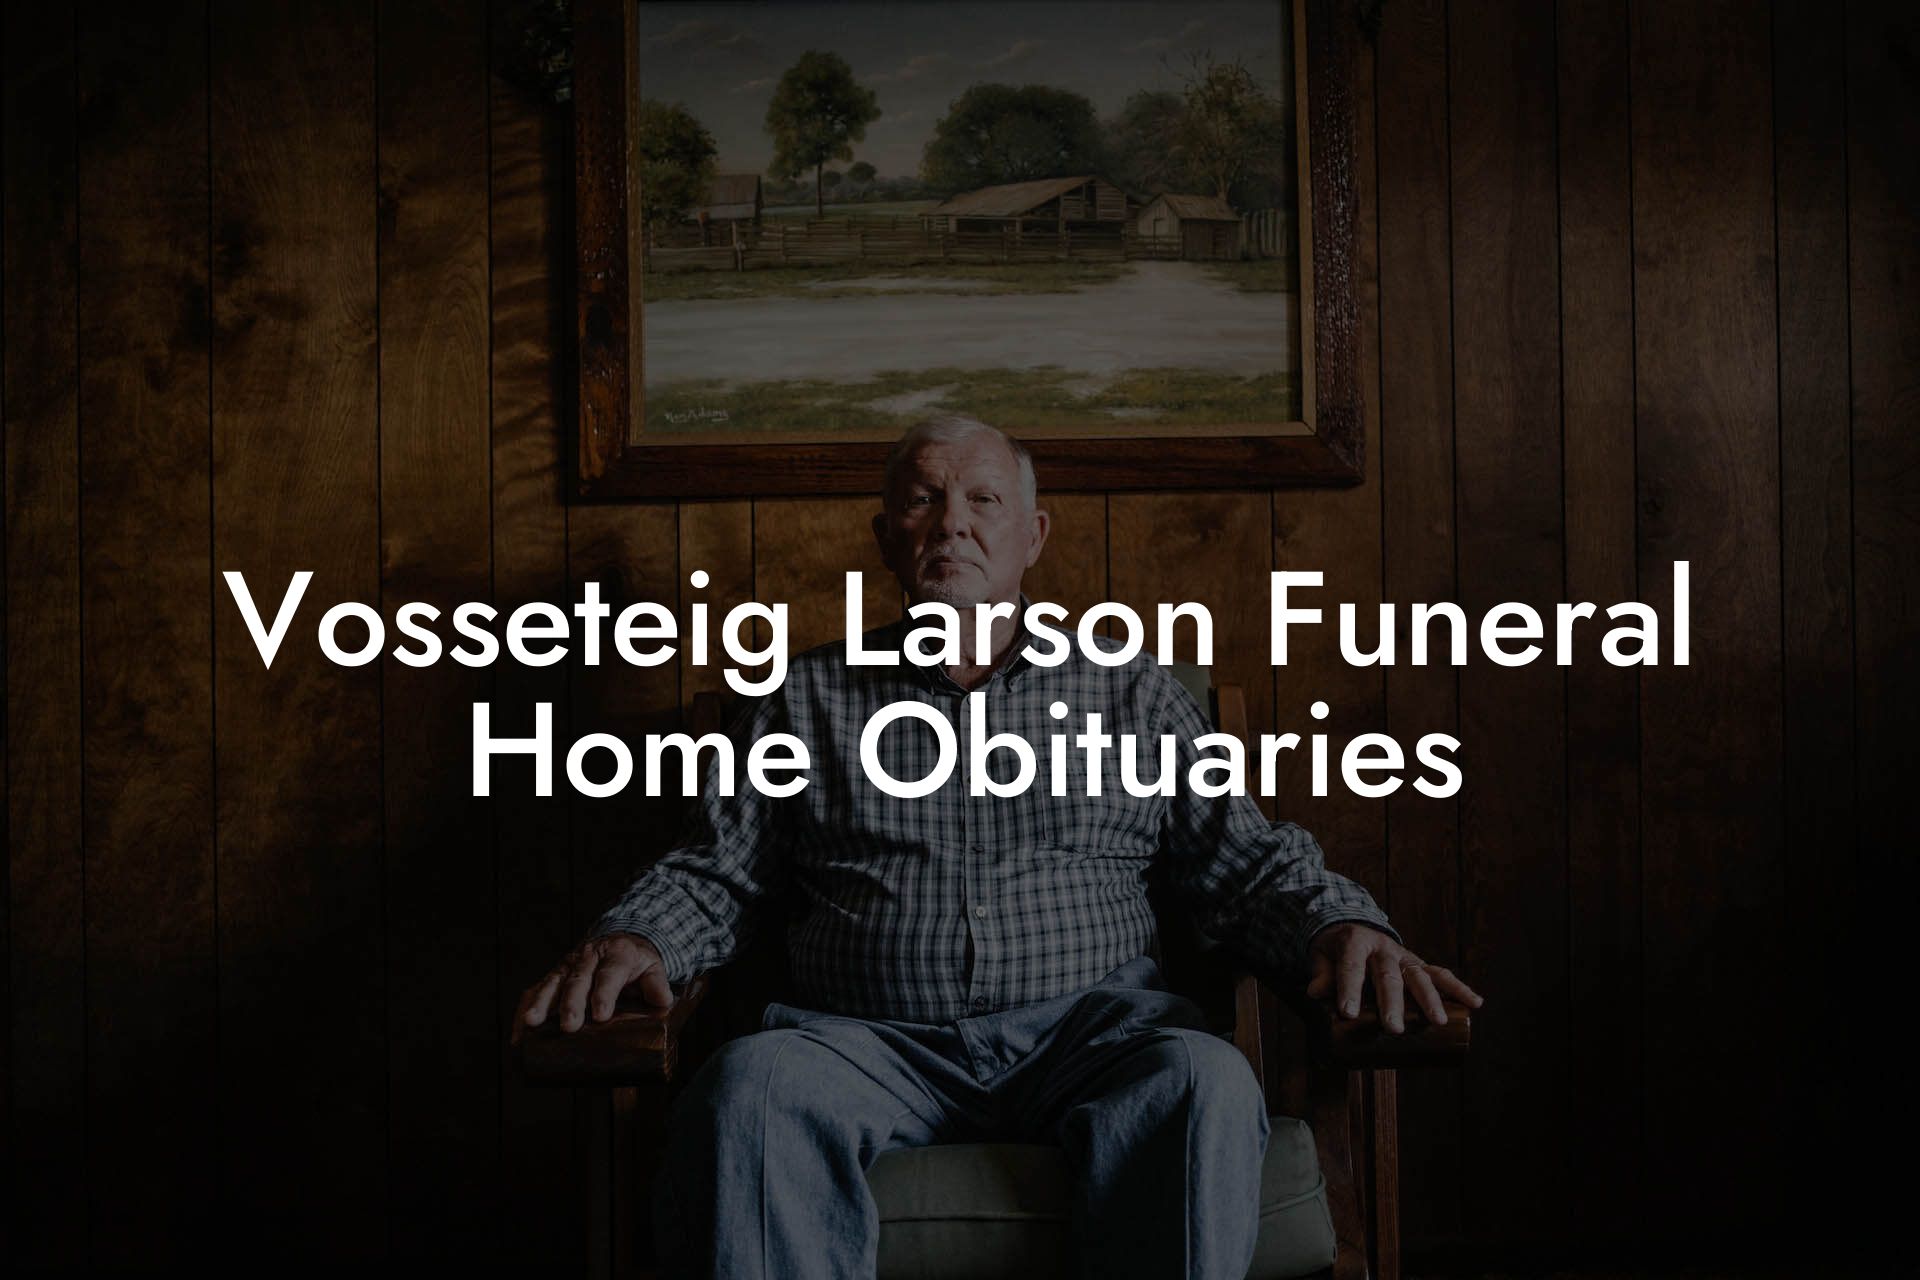 Vosseteig Larson Funeral Home Obituaries